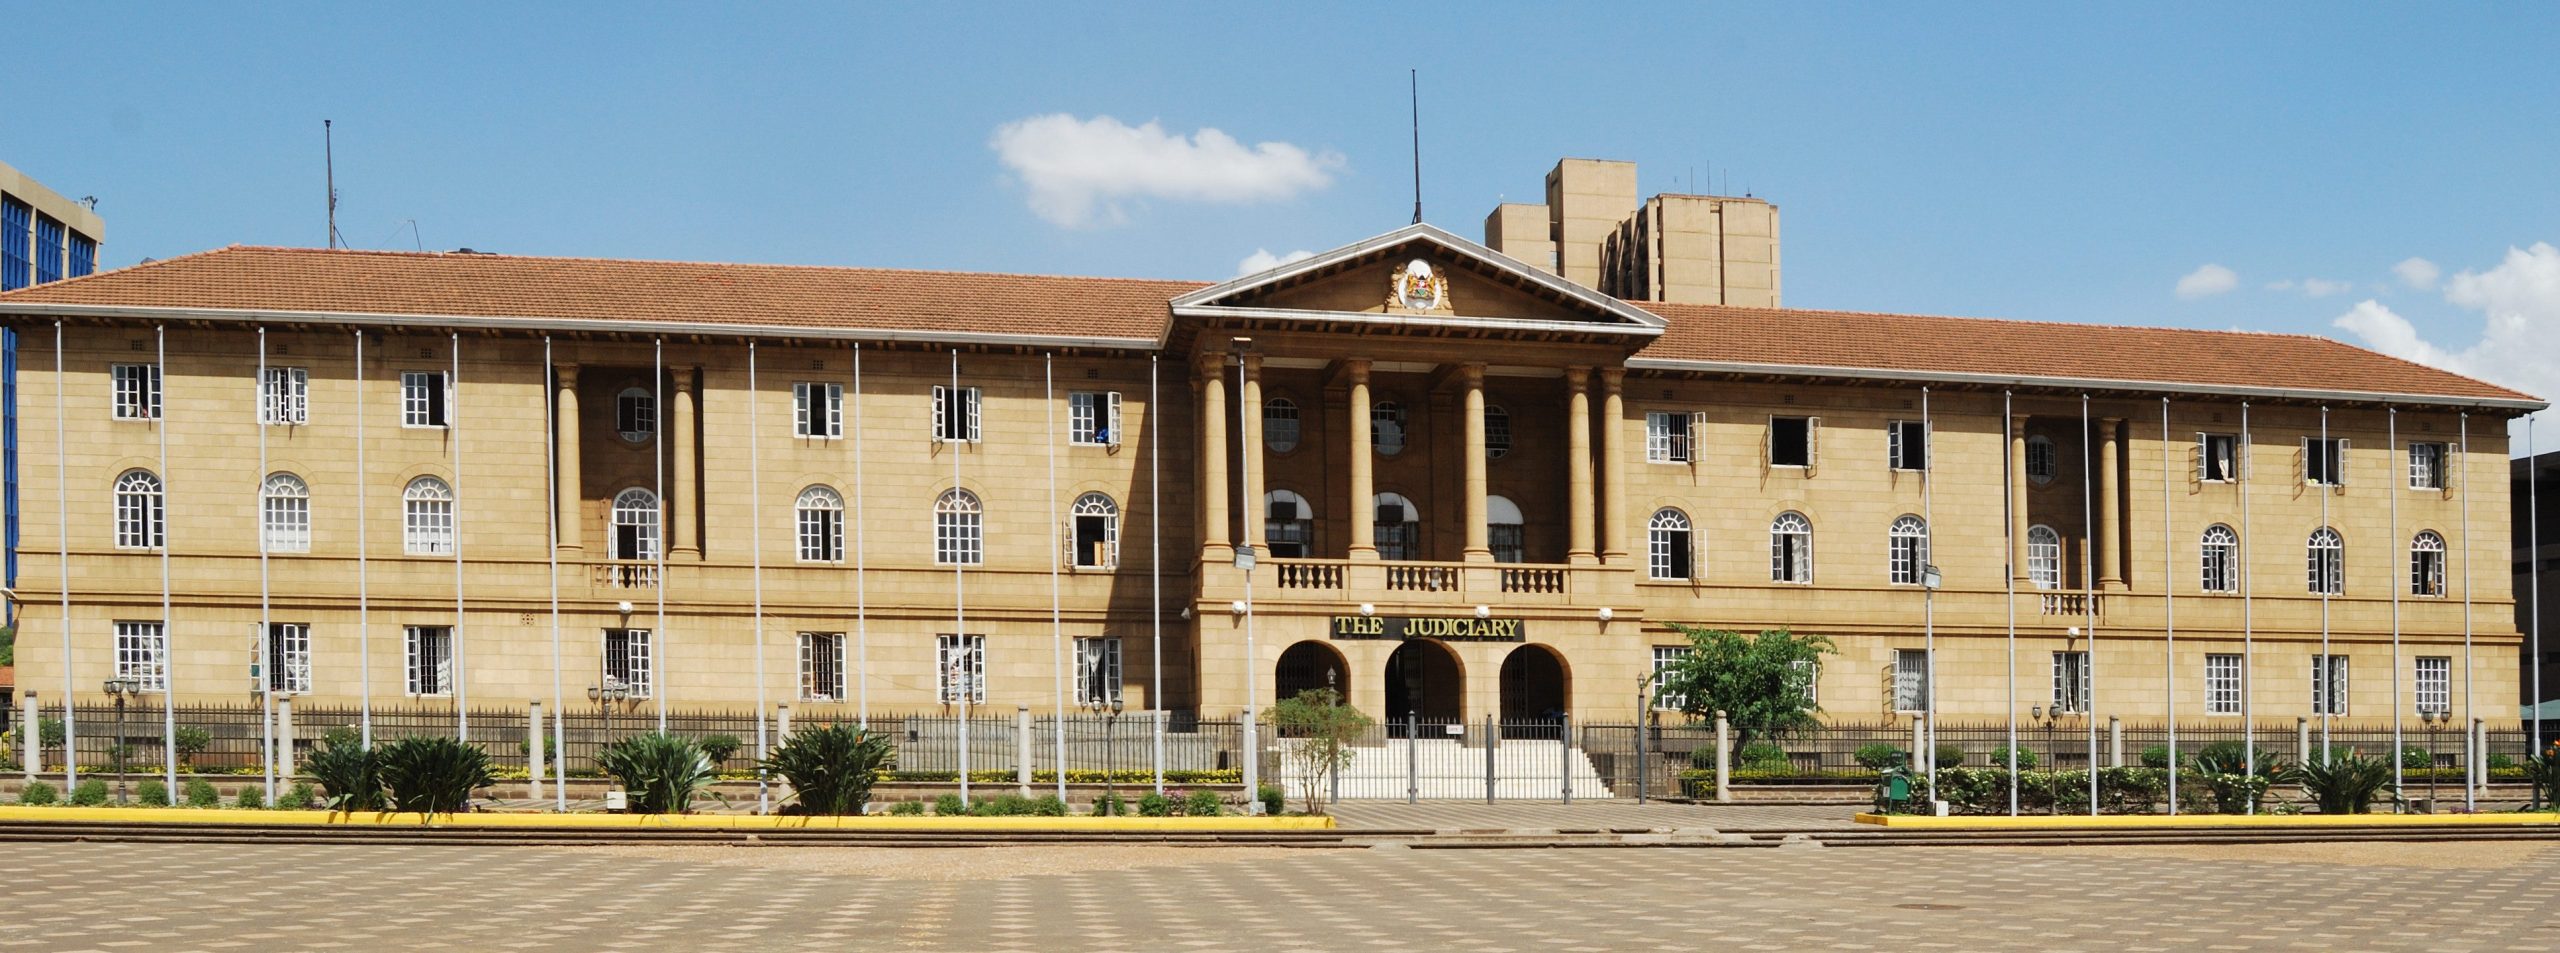 Kenya High Court in Nairobi